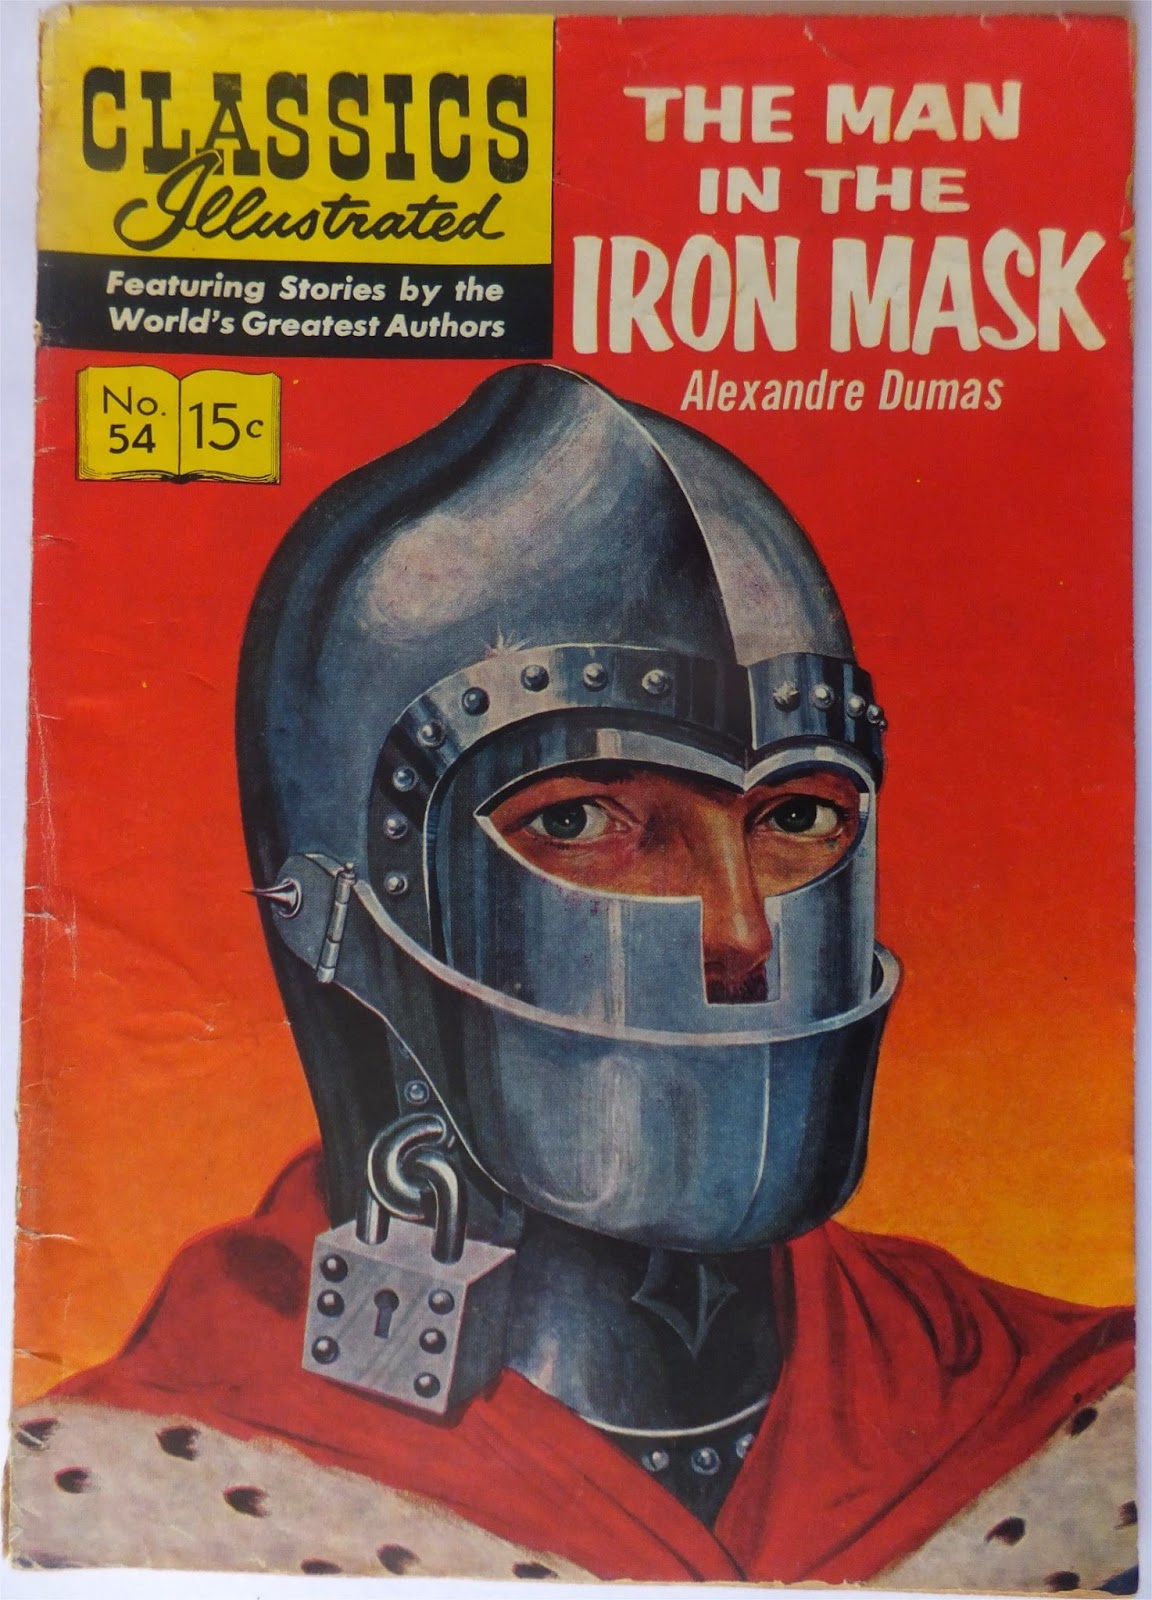 Железная маска дюма. The man in the Iron Mask книга. Человек в железной маске Дюма. Человек в железной маске книга.